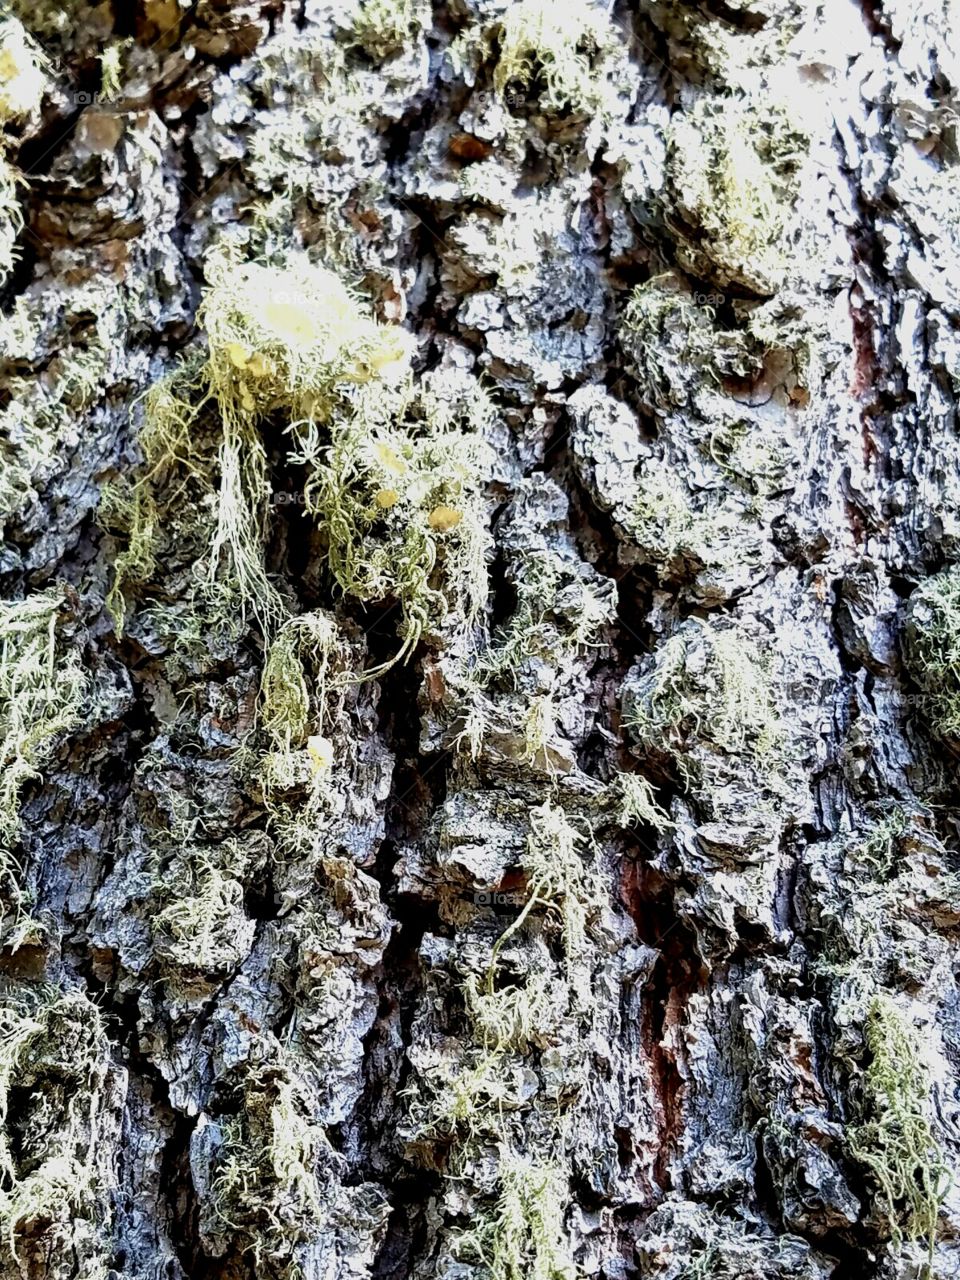 A stationary tree gathers plenty of moss